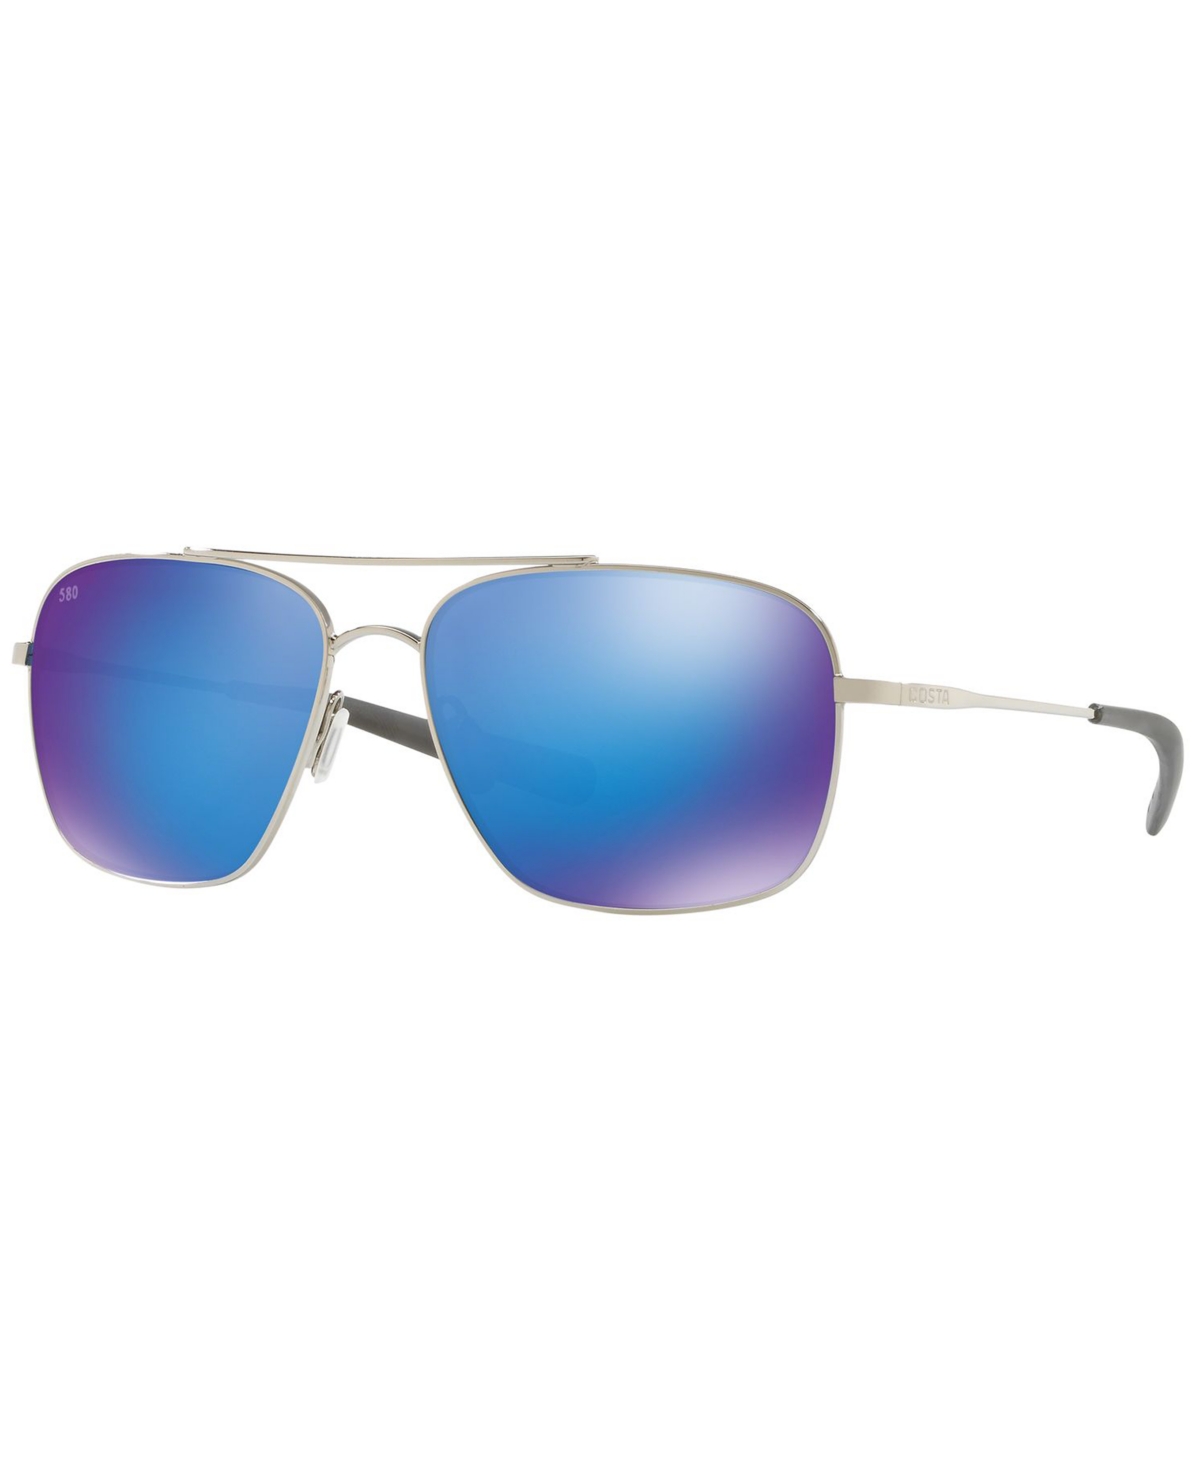 Polarized Sunglasses, Canaveral 59 - SILVER/ BLUE MIRROR POLAR